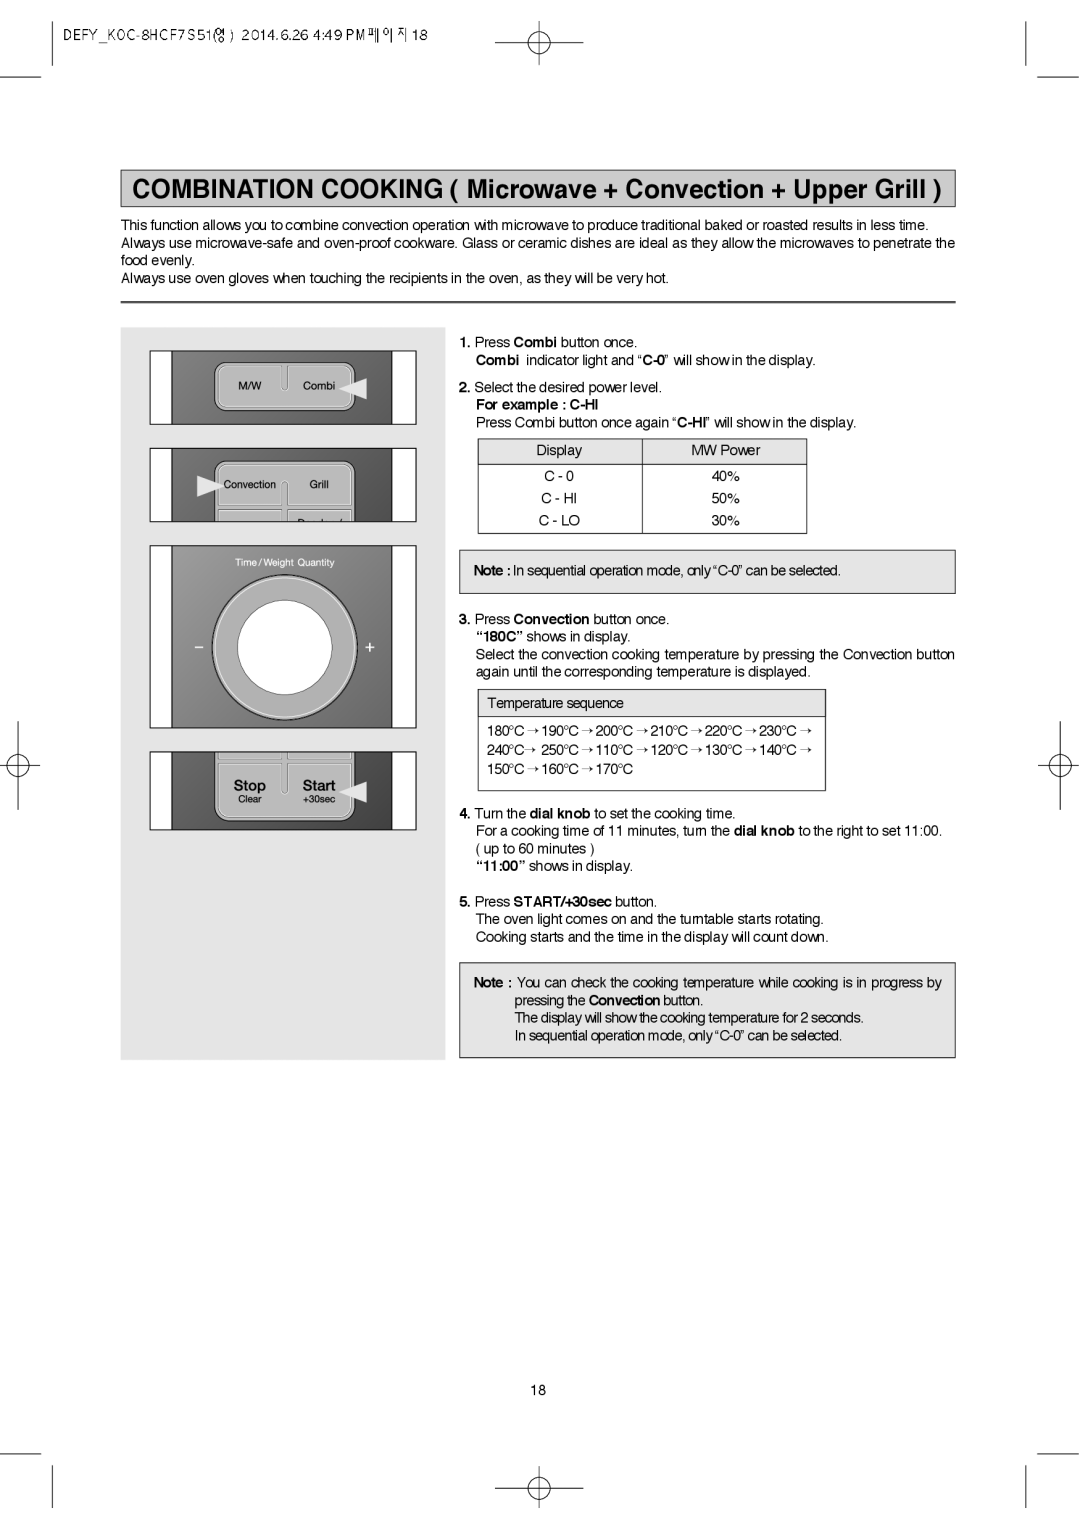 Defy Appliances MWA 2434 MM user manual For example C-HI 